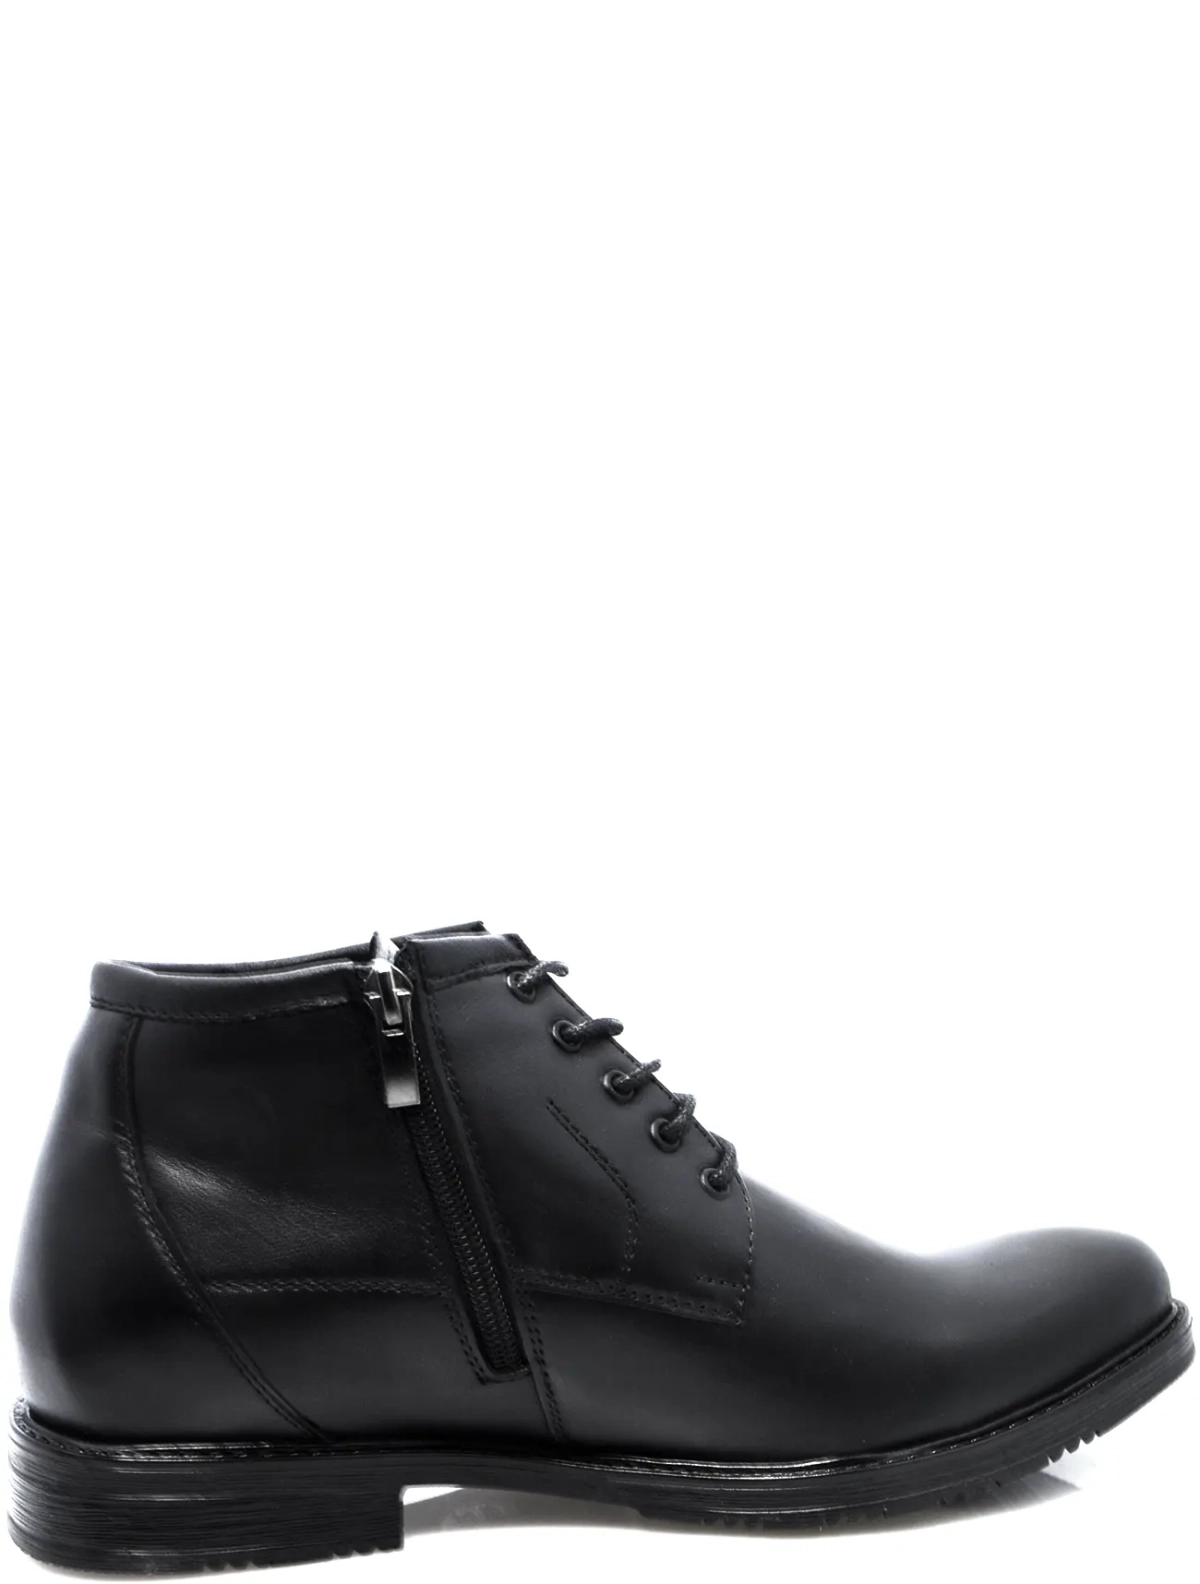 EDERRO 219-1808-682 мужские ботинки